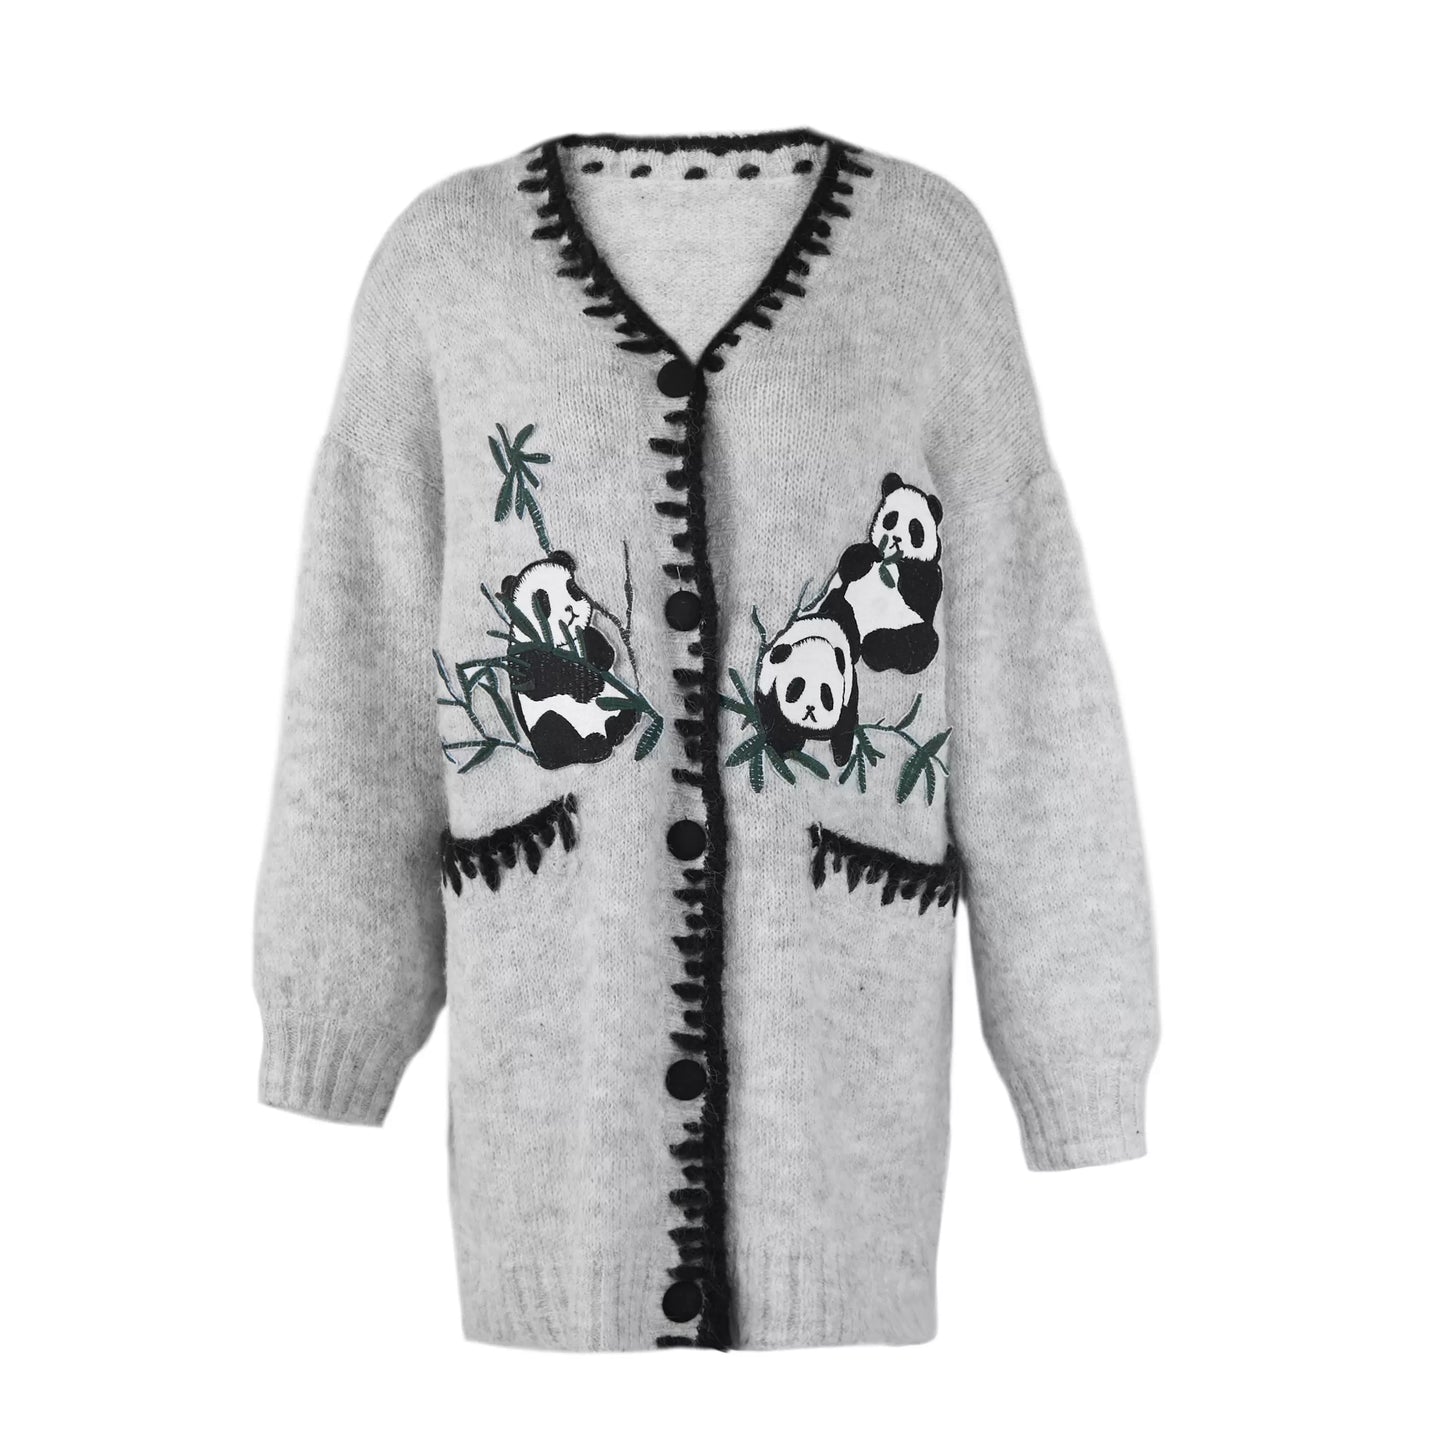 gray panda knitted cardigan